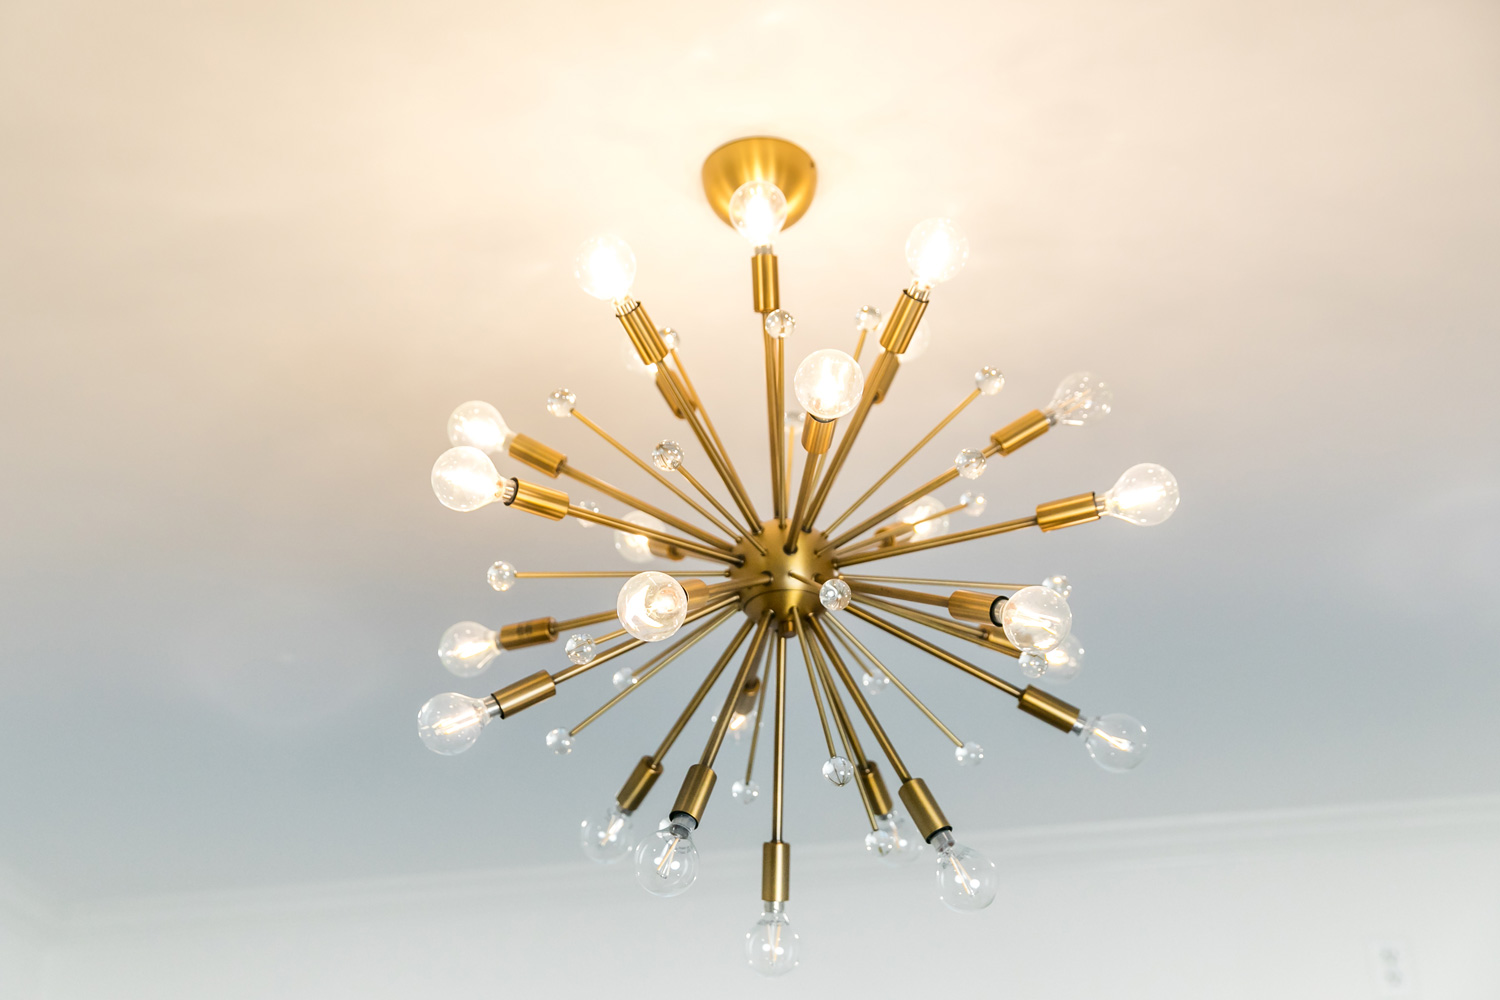 Retro starburst warm gold lighting fixture chandelier against a white wall